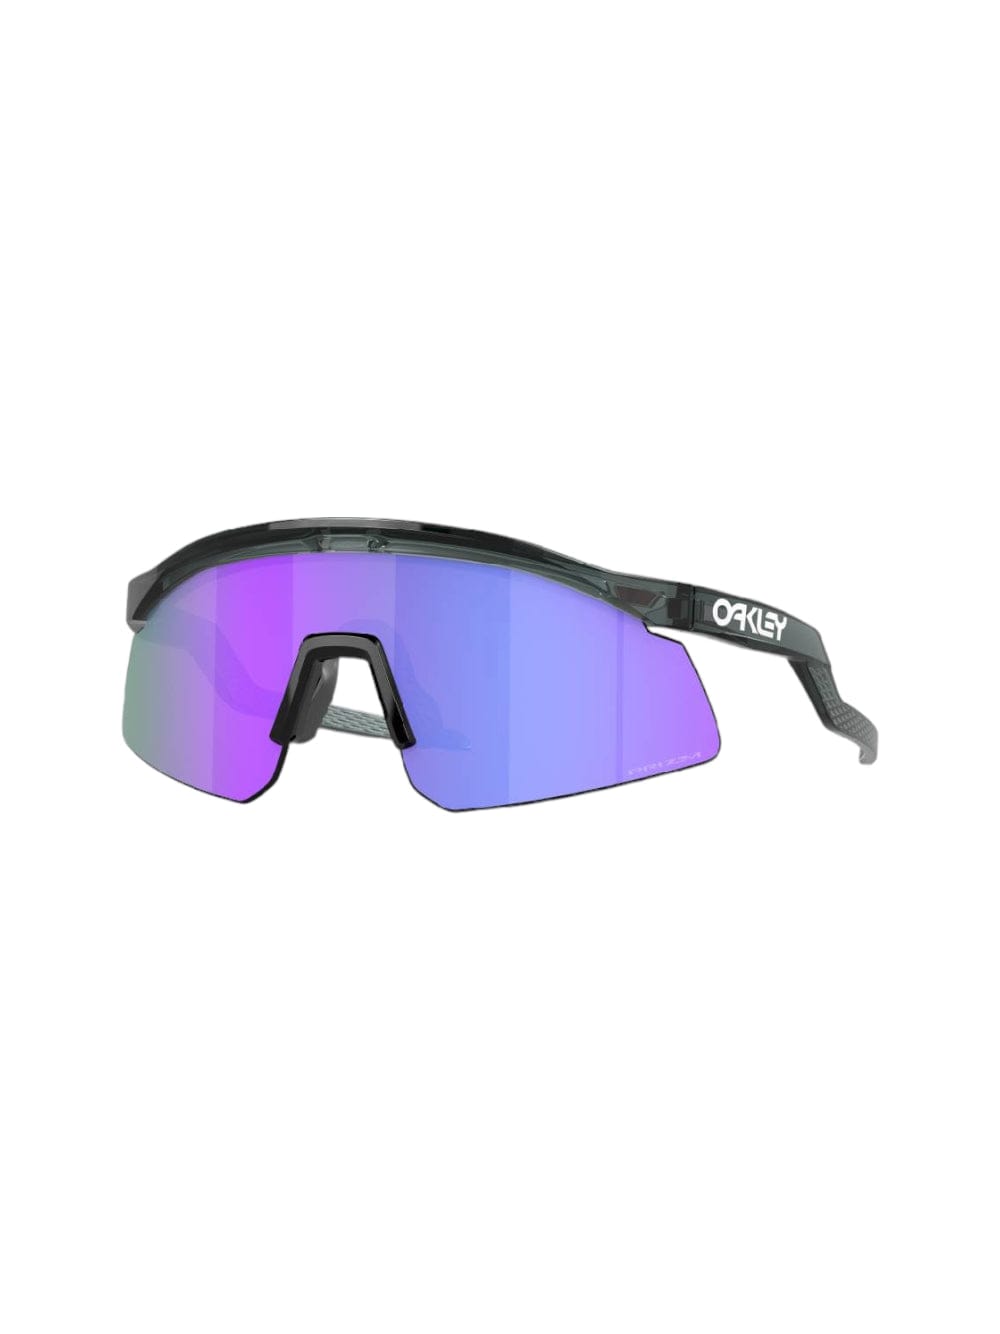 Shop Oakley Hydra - 9229 Sunglasses